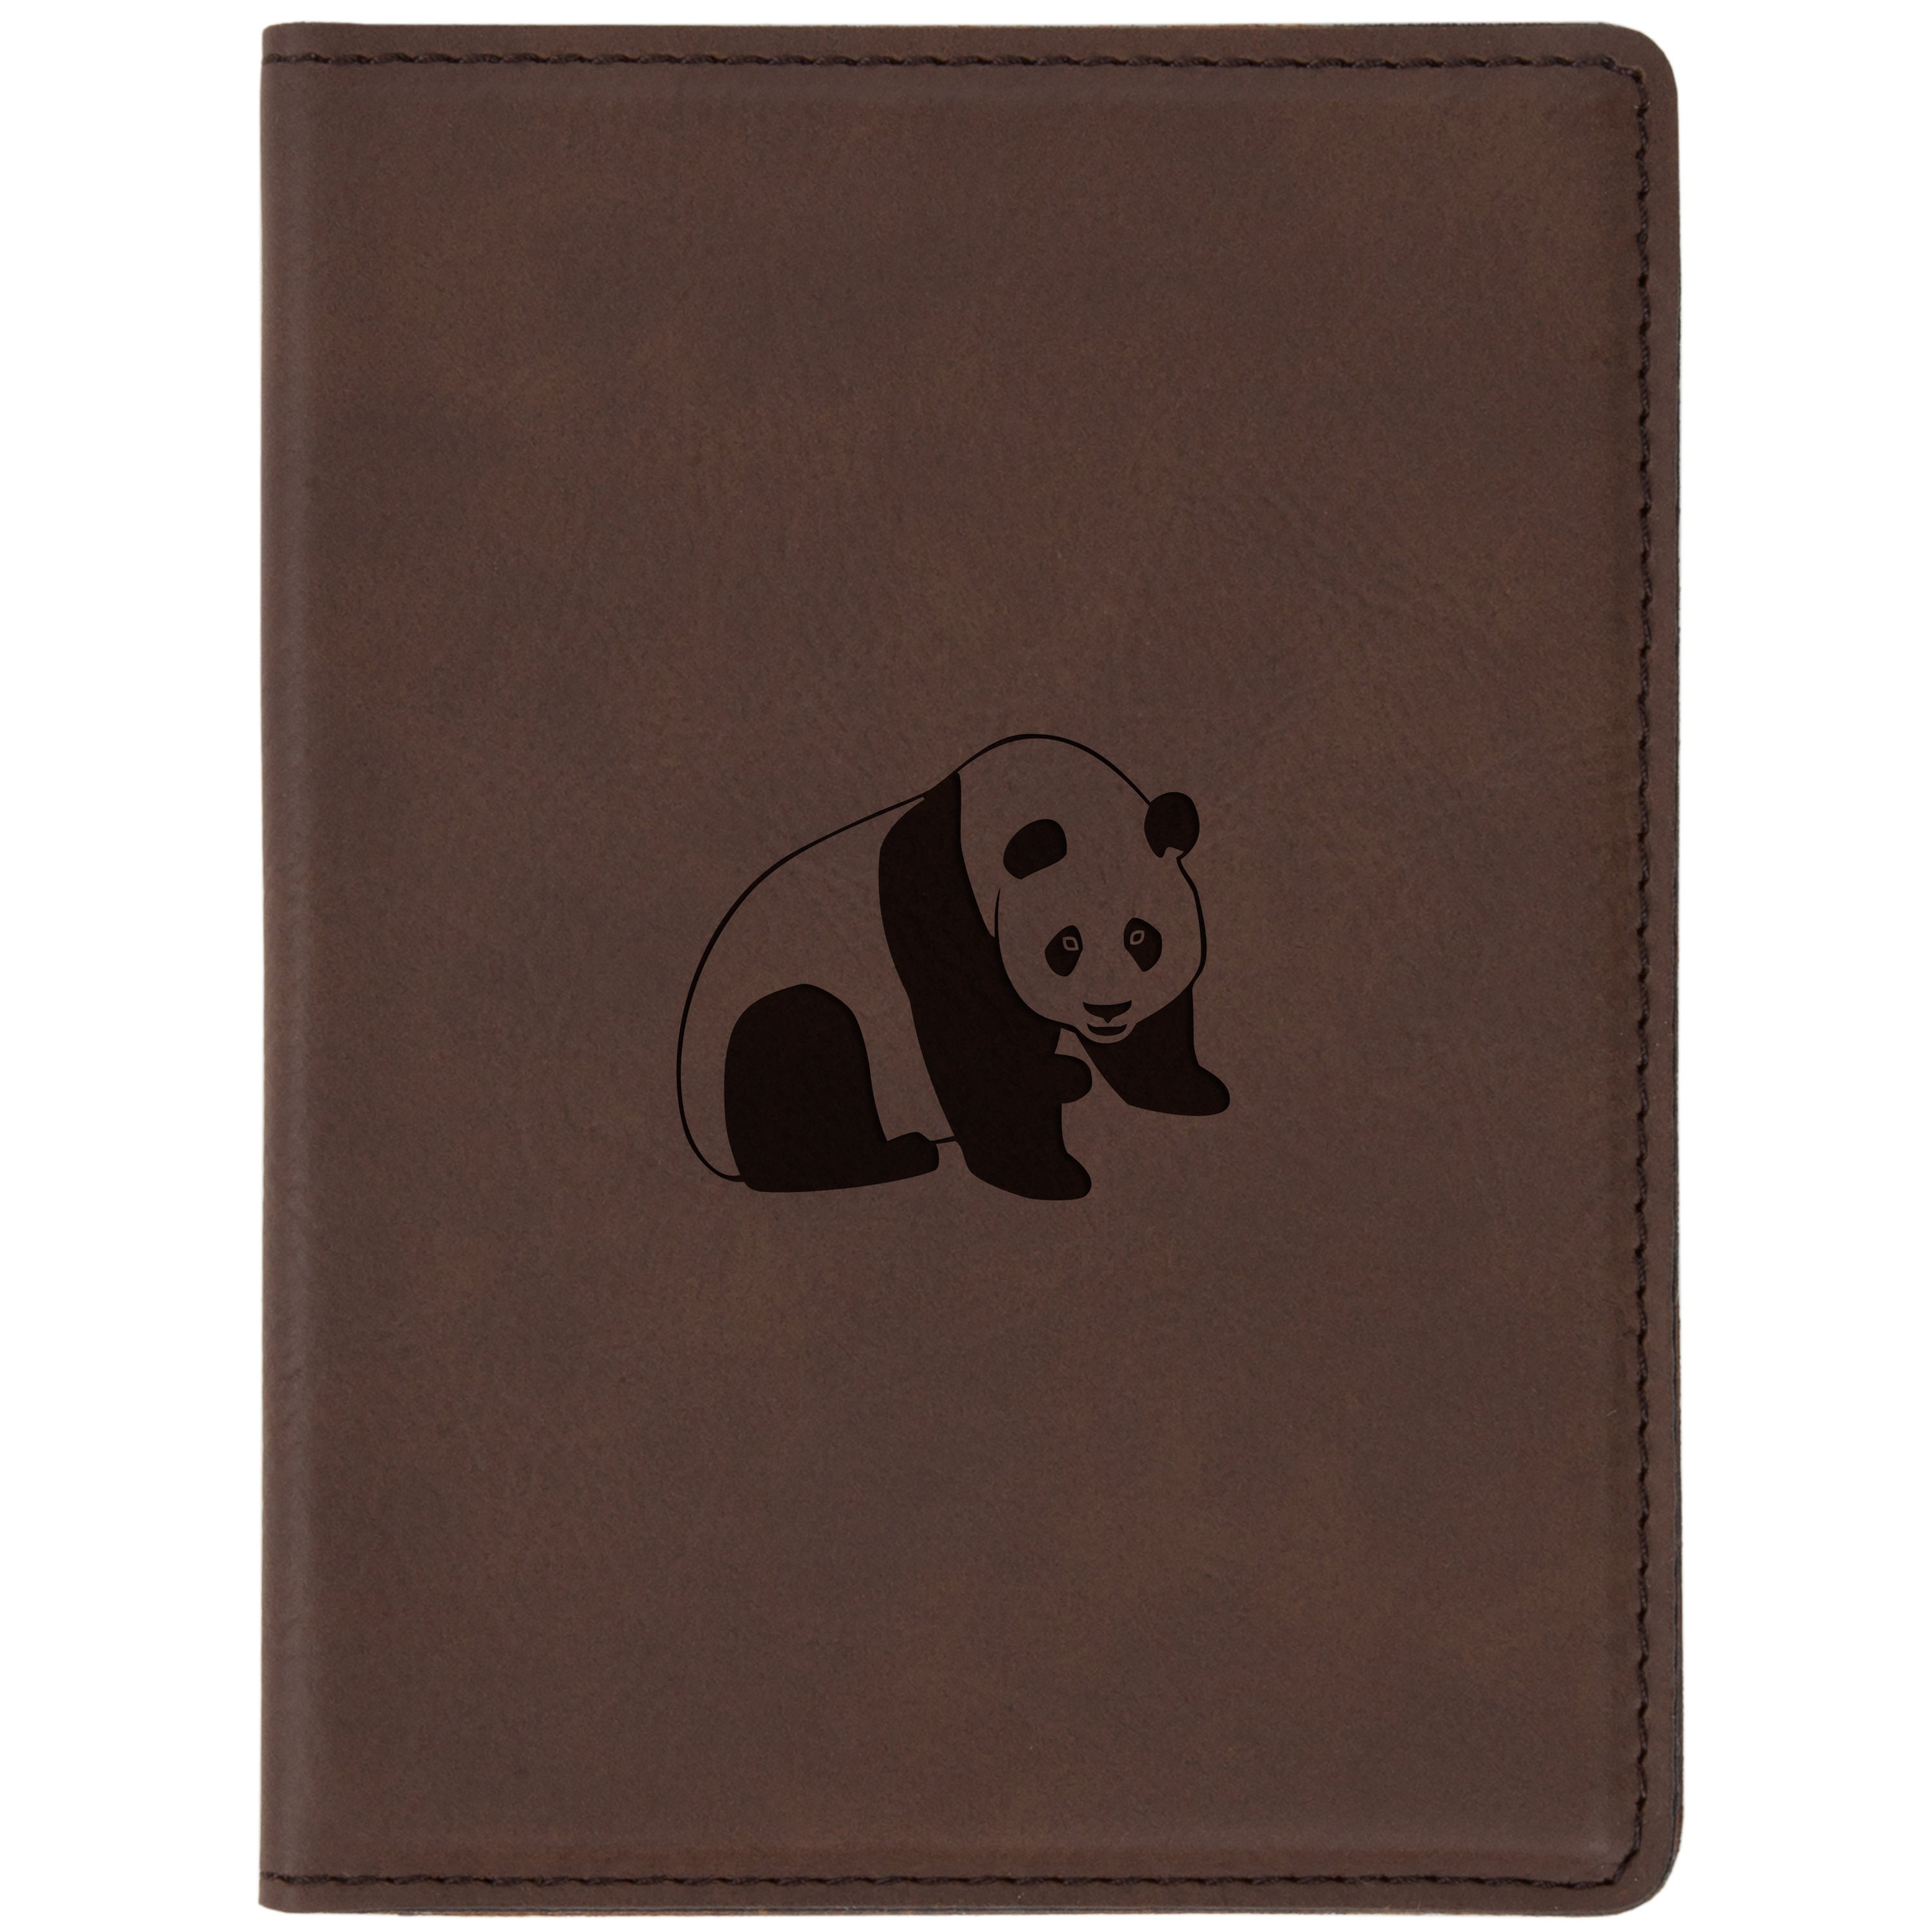 Misfit Panda Passport Holder : Buy Misfit Panda Black Passport Cover Online